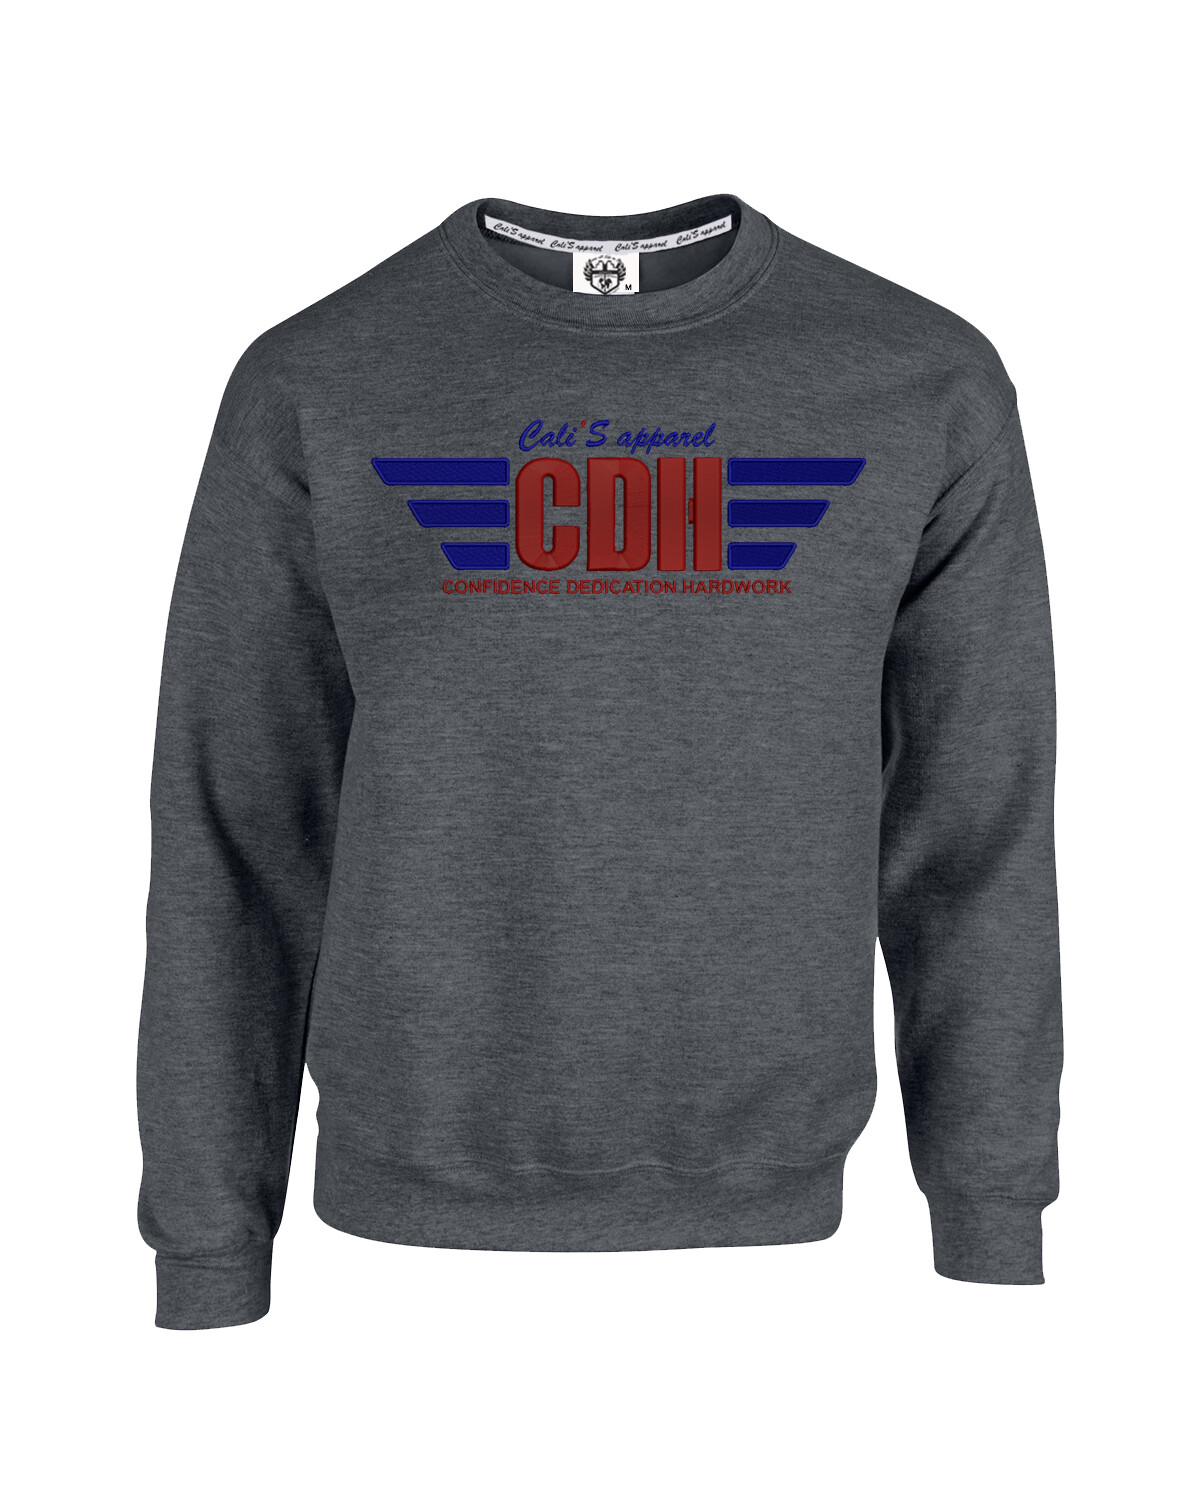 Grey Cali's apparel CDH Confidence/Dedication/Hardwork Wings Badge of Honor Unisex Crewneck Sweatshirt